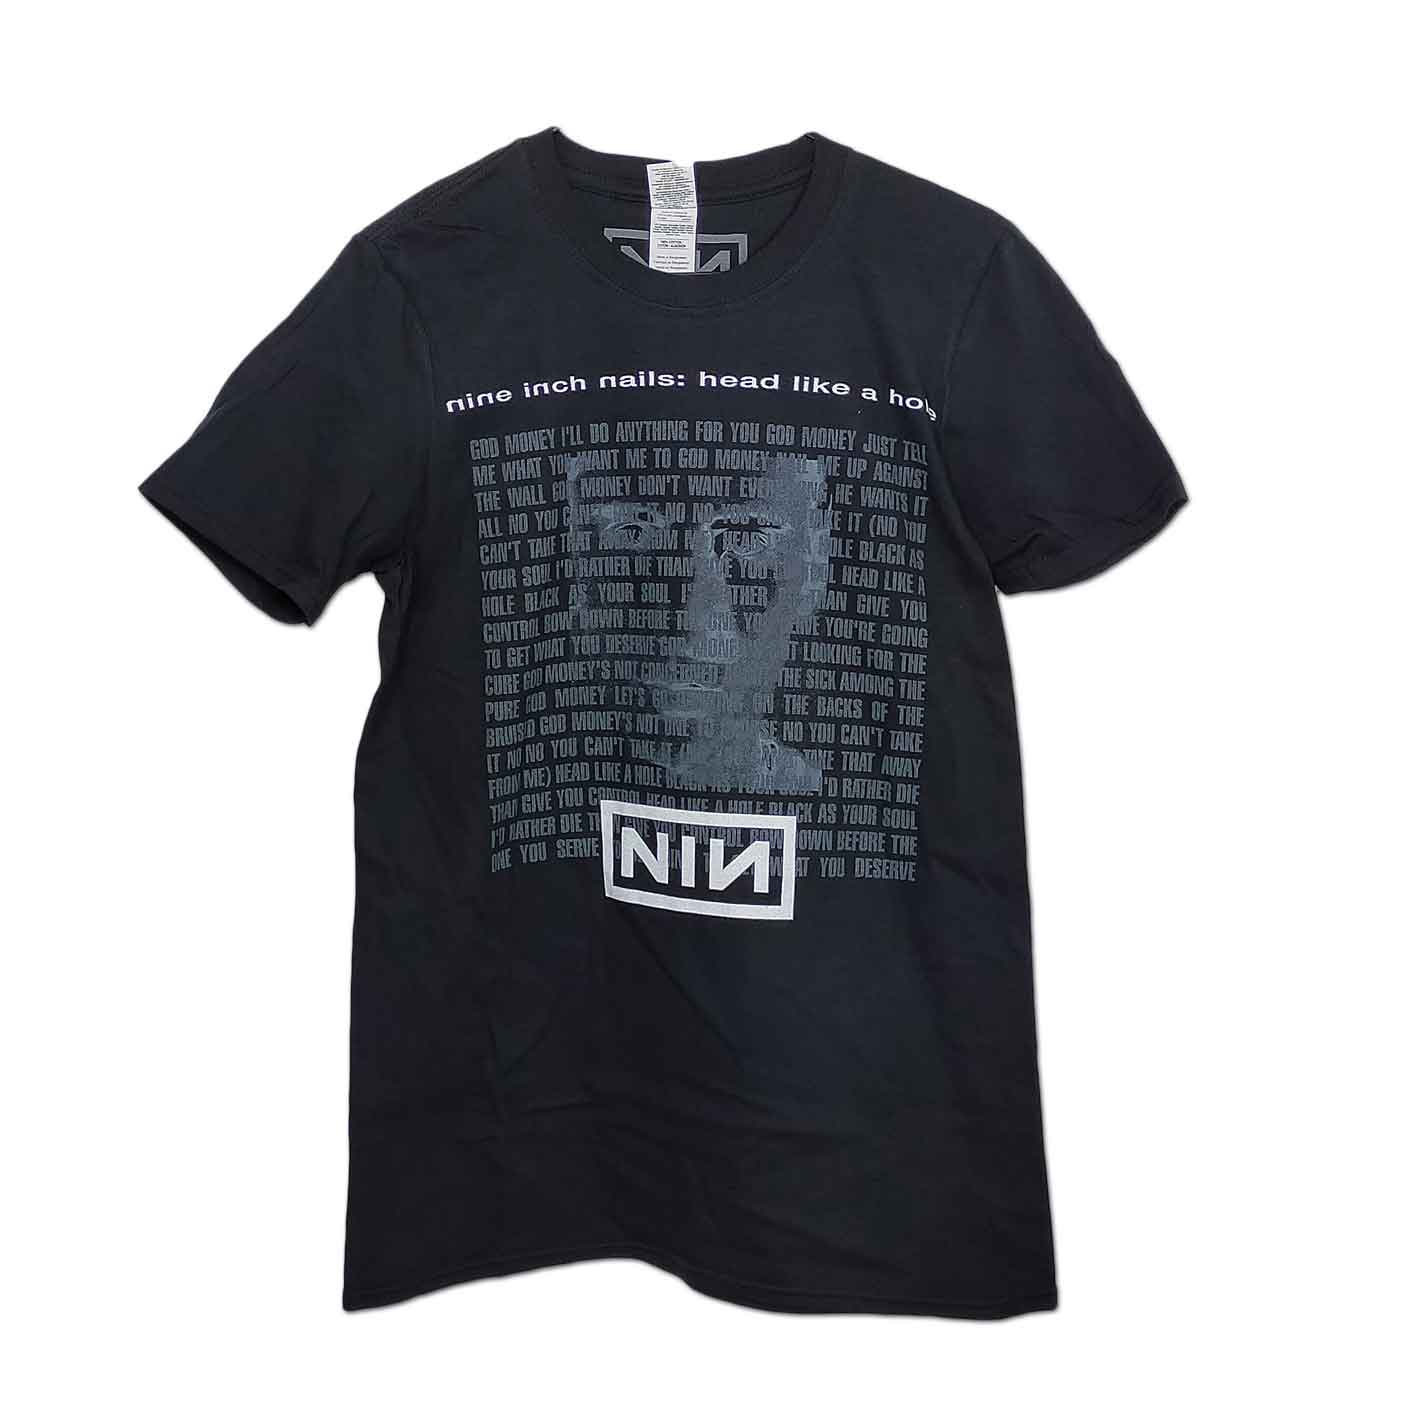 Nine Inch Nails バンドTシャツ ナイン・インチ・ネイルズ Head Like A Hole - バンドTシャツ の通販ショップ『Tee-Merch!』